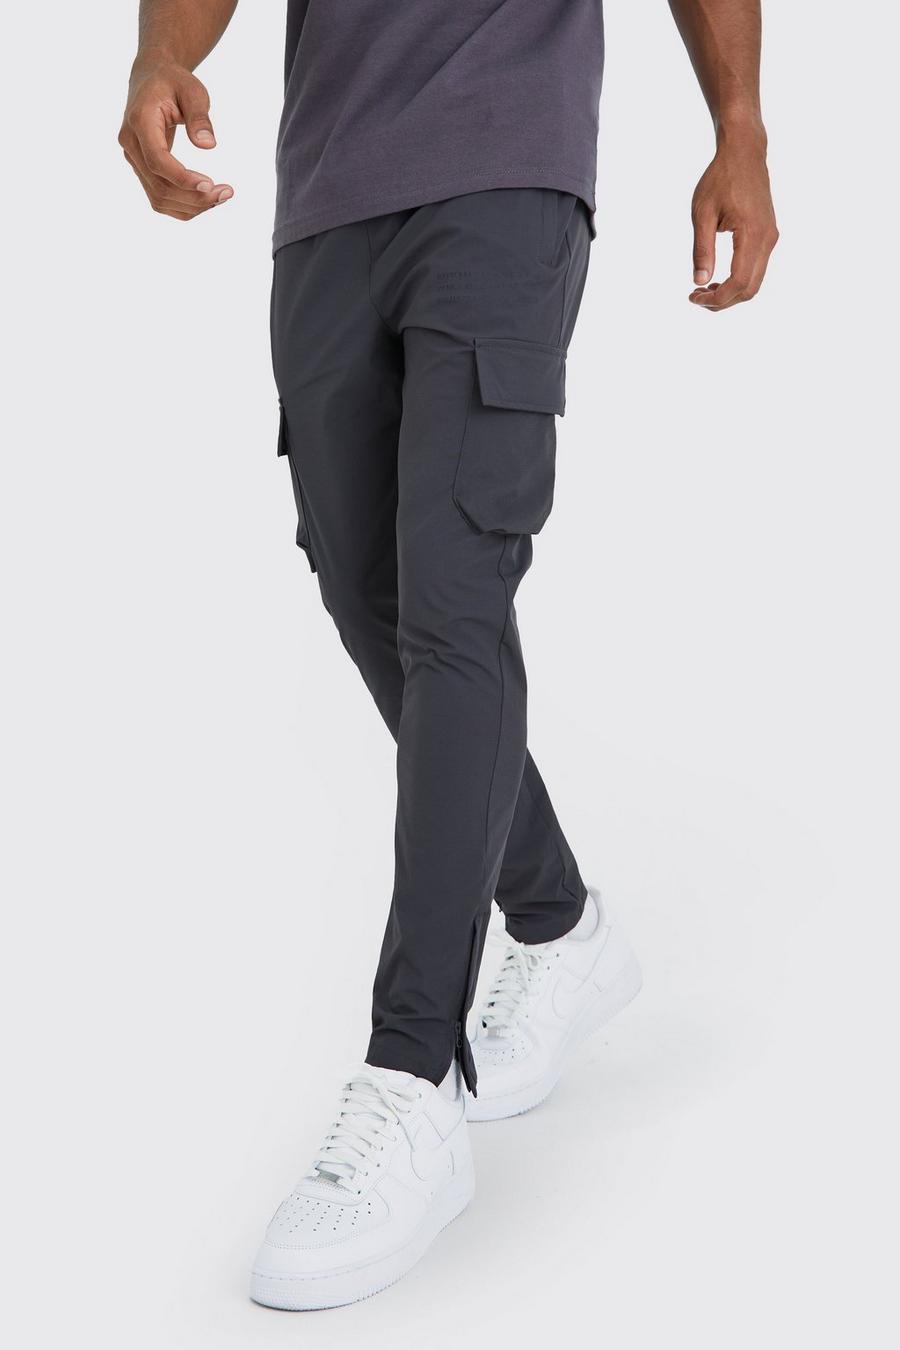 Pantaloni tuta Man Active Gym tecnici stile Cargo, Charcoal grigio